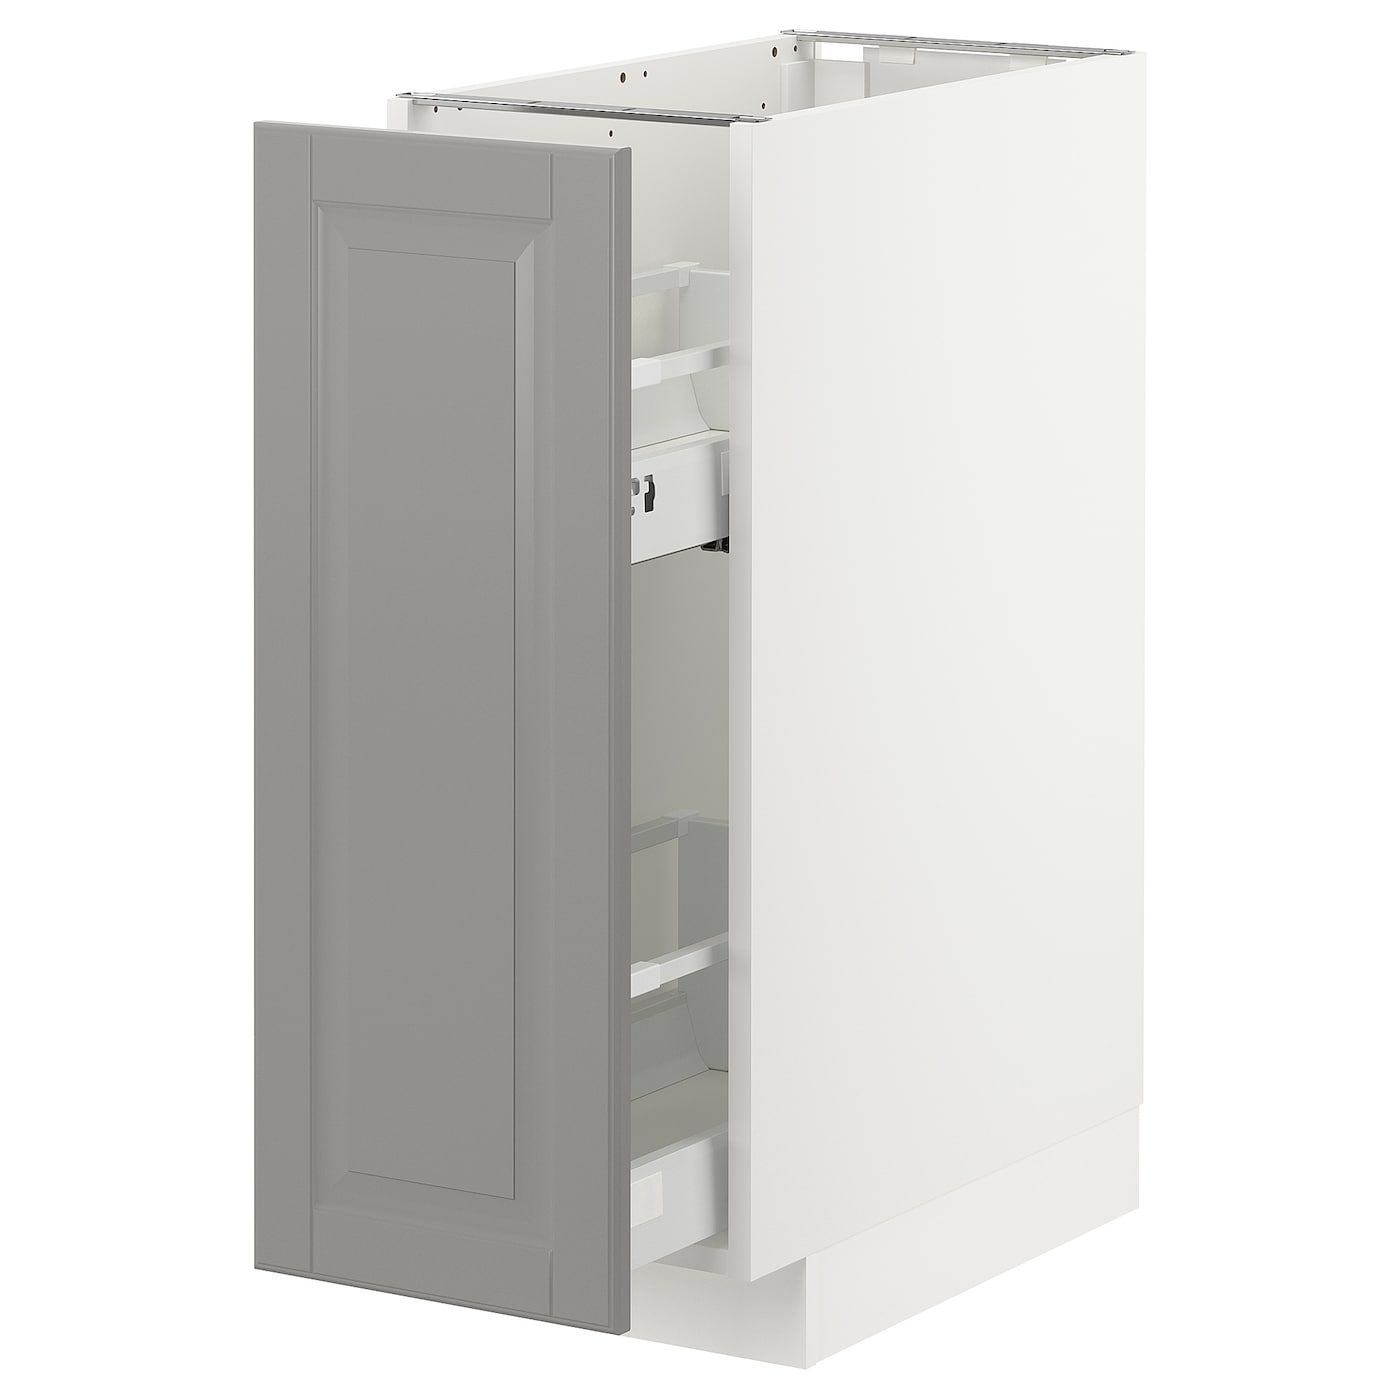 Напольный шкаф - METOD IKEA/ МЕТОД ИКЕА,  30х88 см, белый/серый